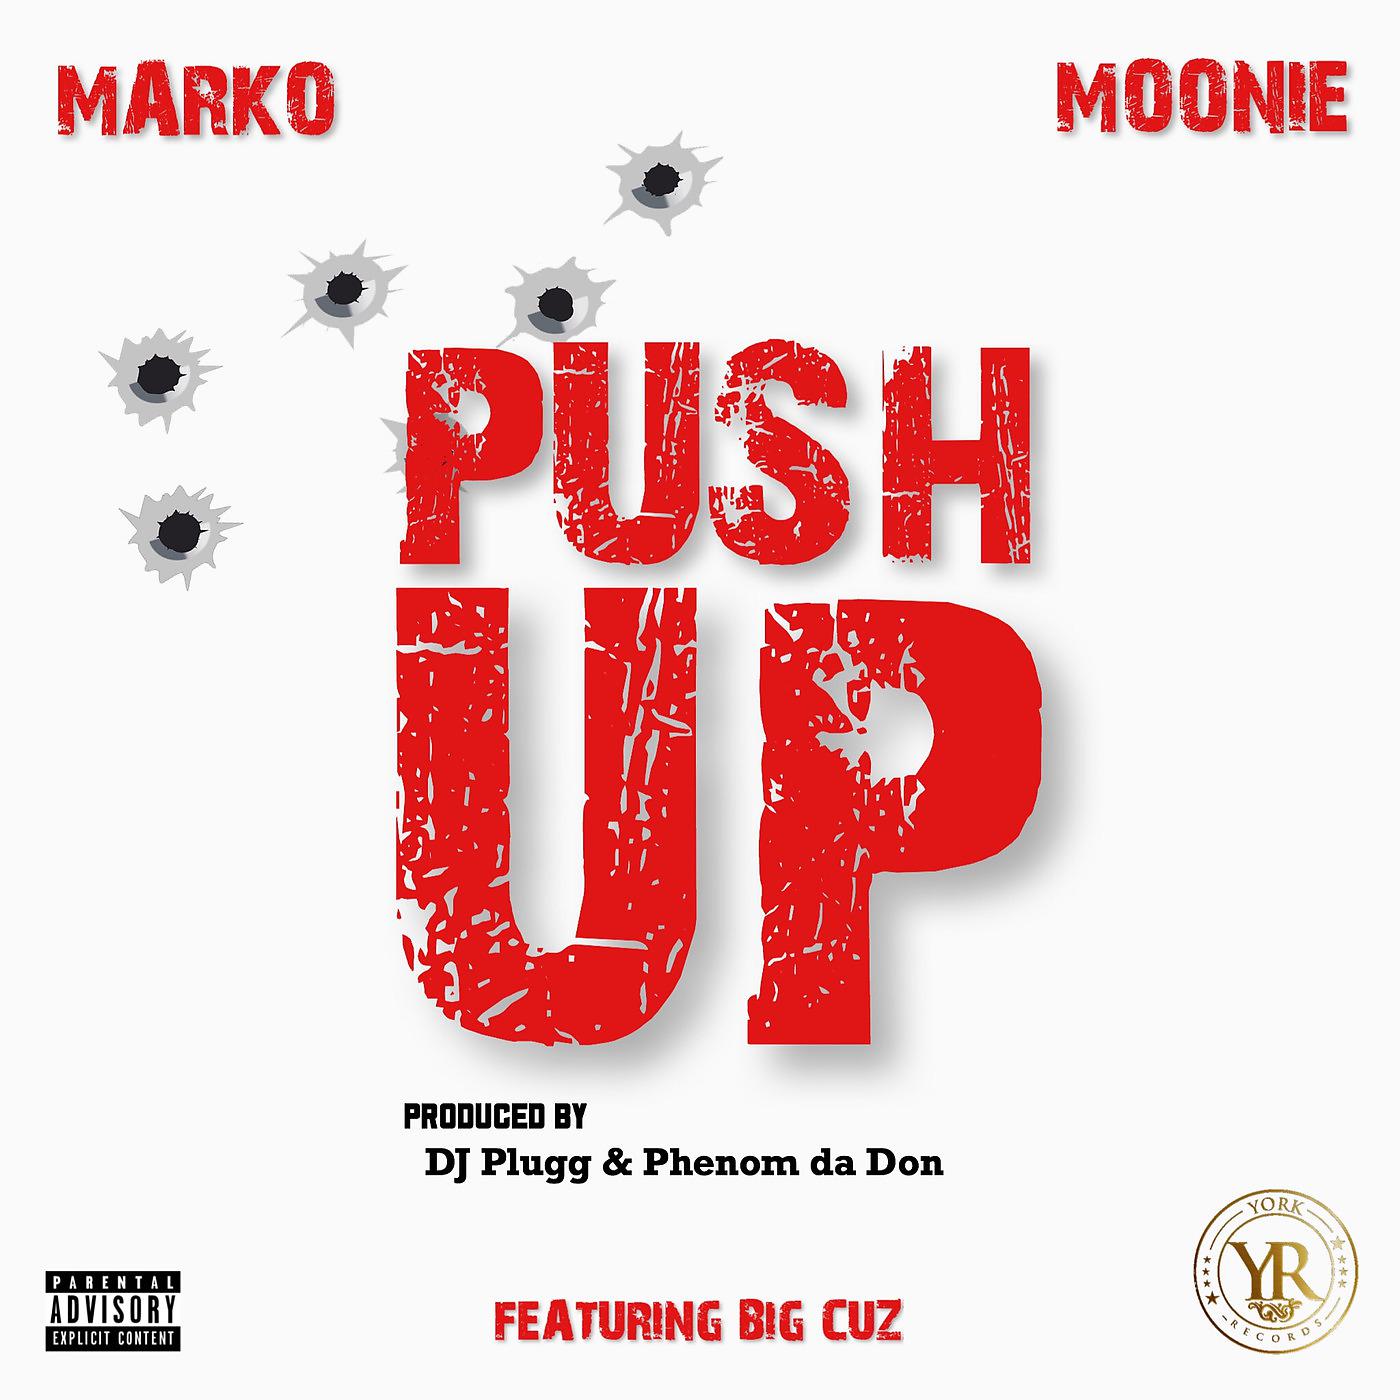 Постер альбома Push Up